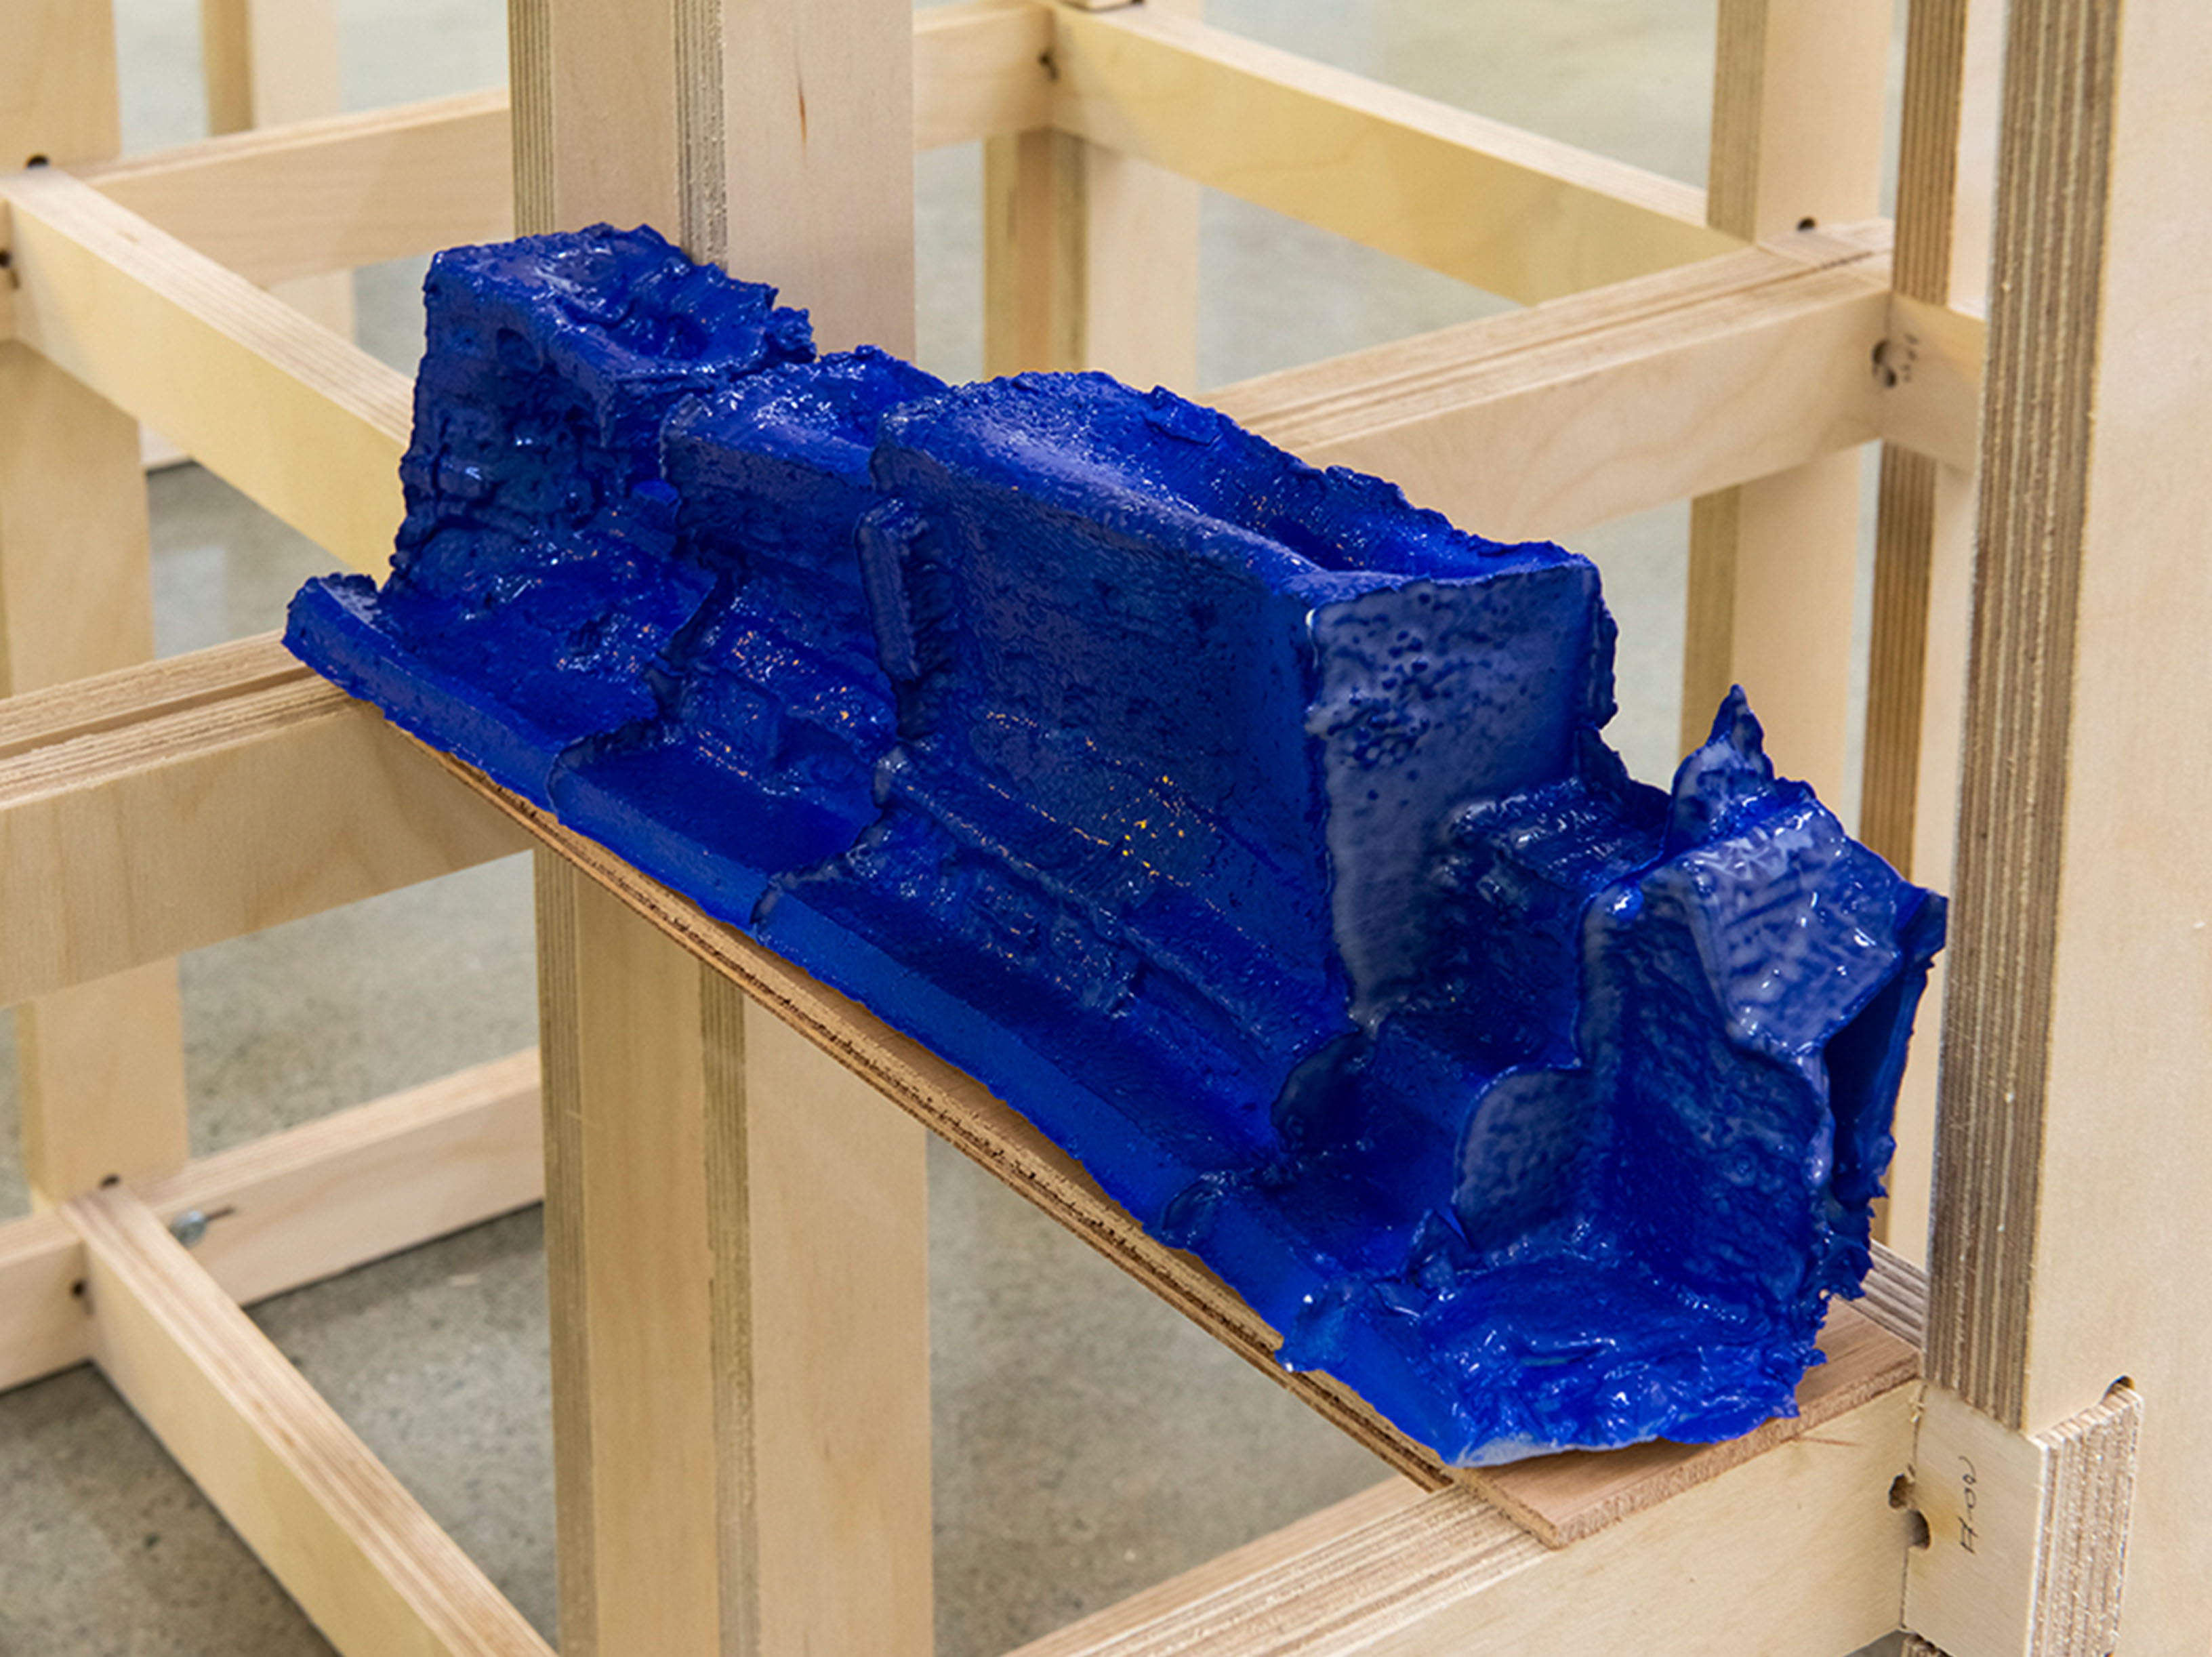 Blue ceramic blocks balancing on a narrow wooden frame.